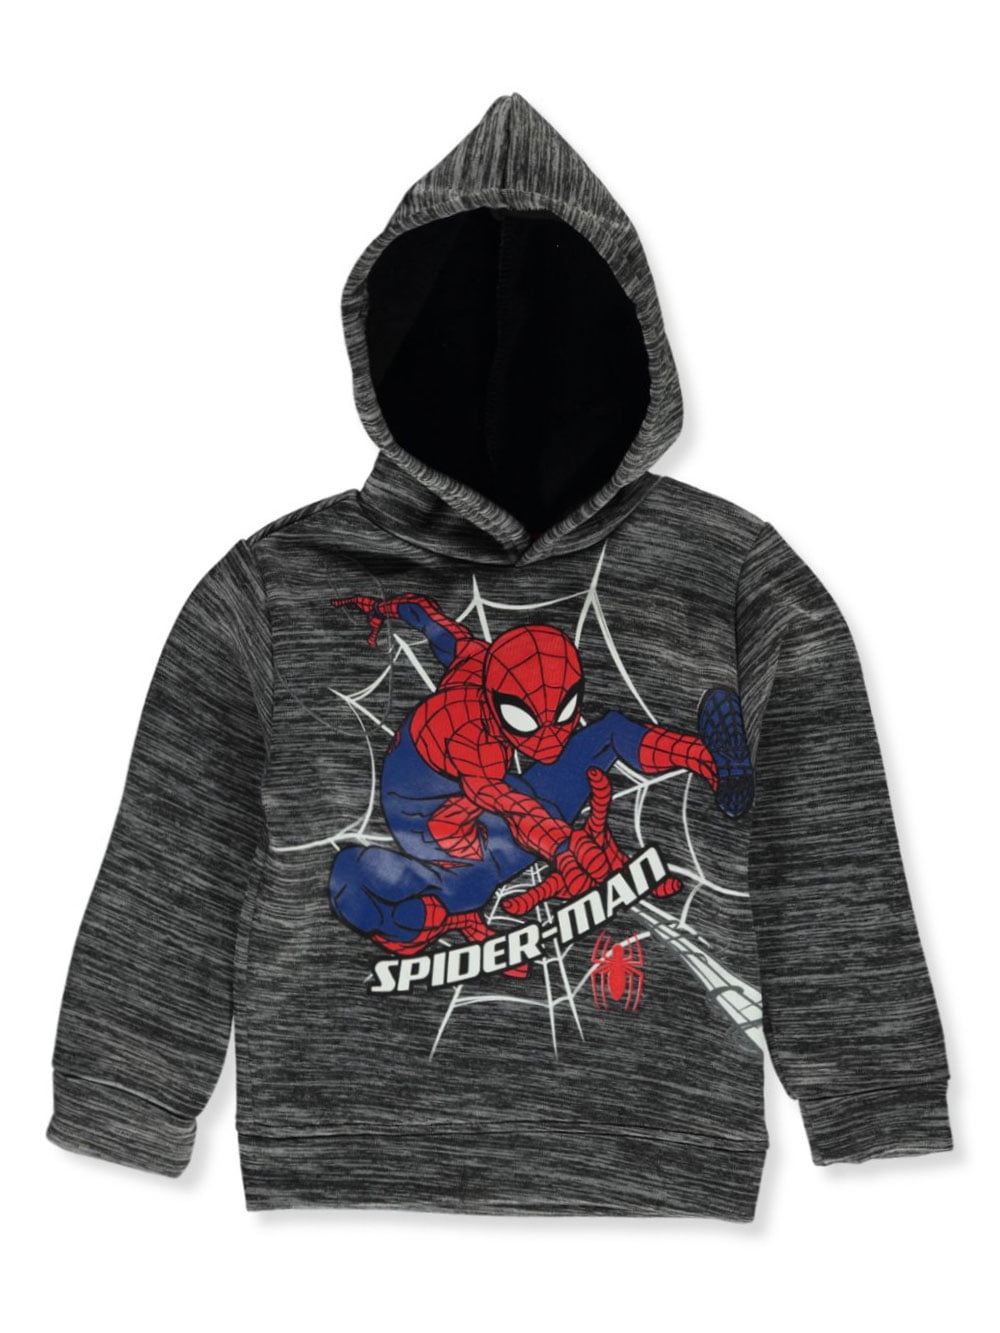 Fleece Pull Over Sweatshirt for Boys Girls Kids Youth Spider Unisex Toddler Hoodies 